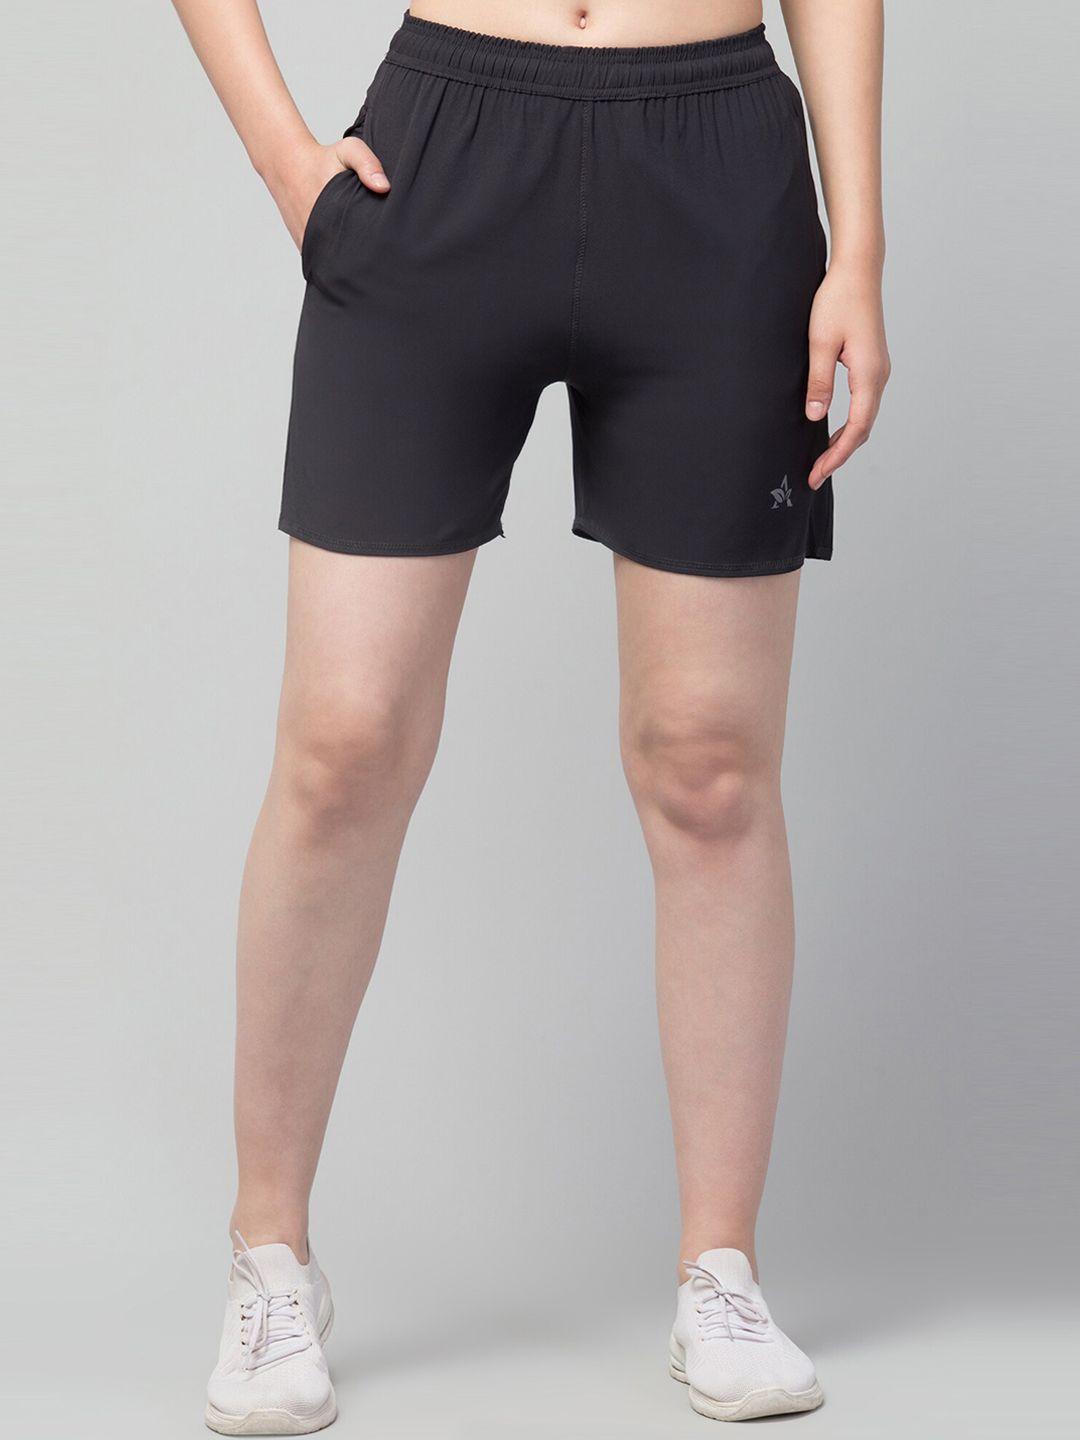 apraa & parma women e-dry sports shorts